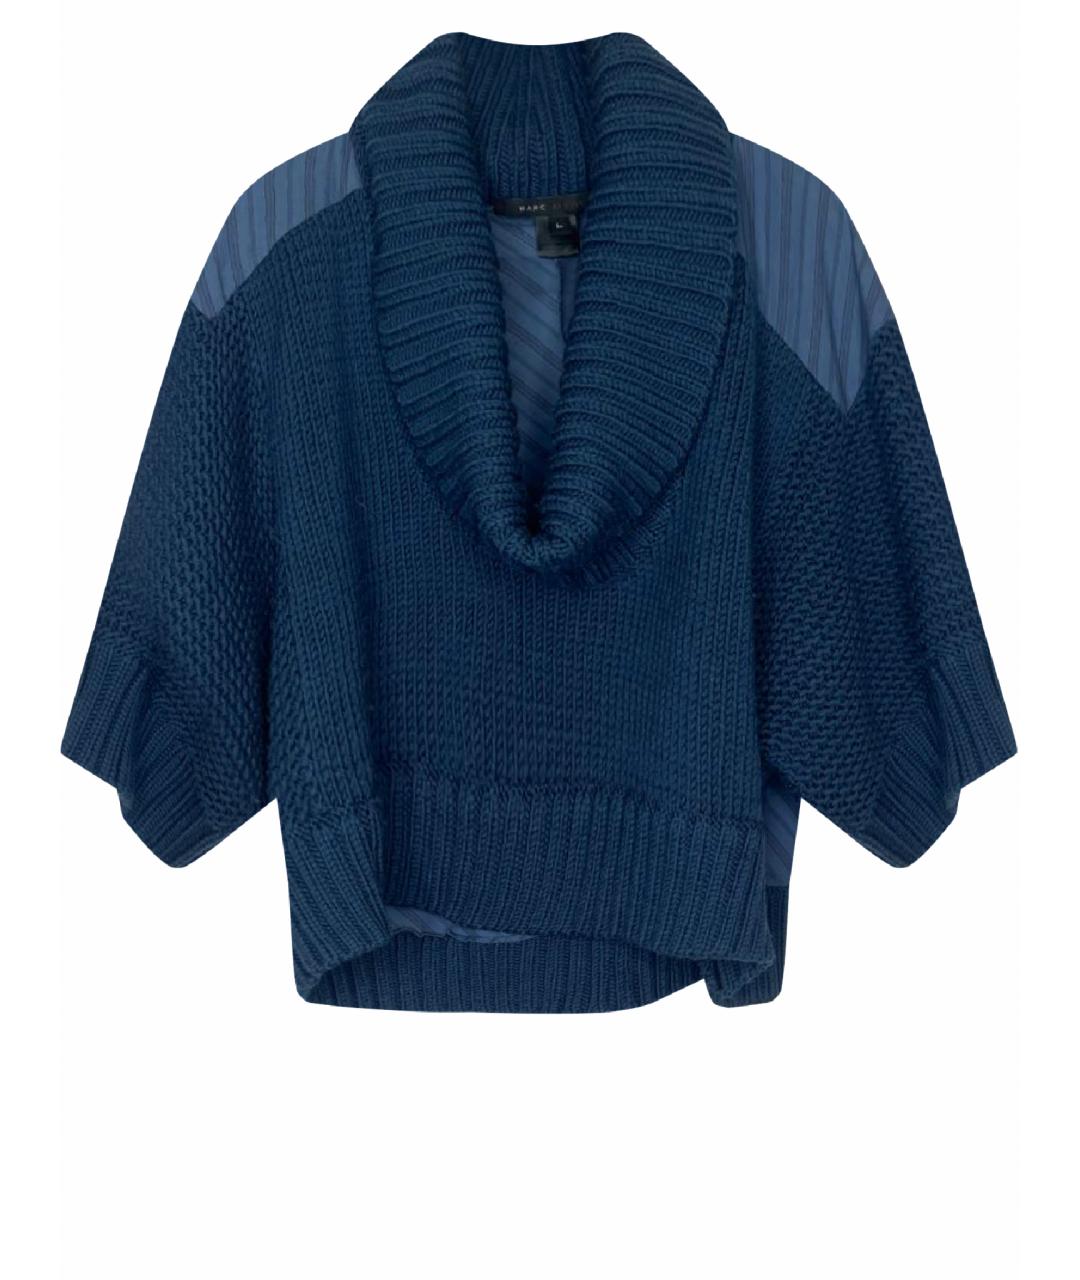 MARC JACOBS Темно-синий хлопковый джемпер / свитер, фото 1